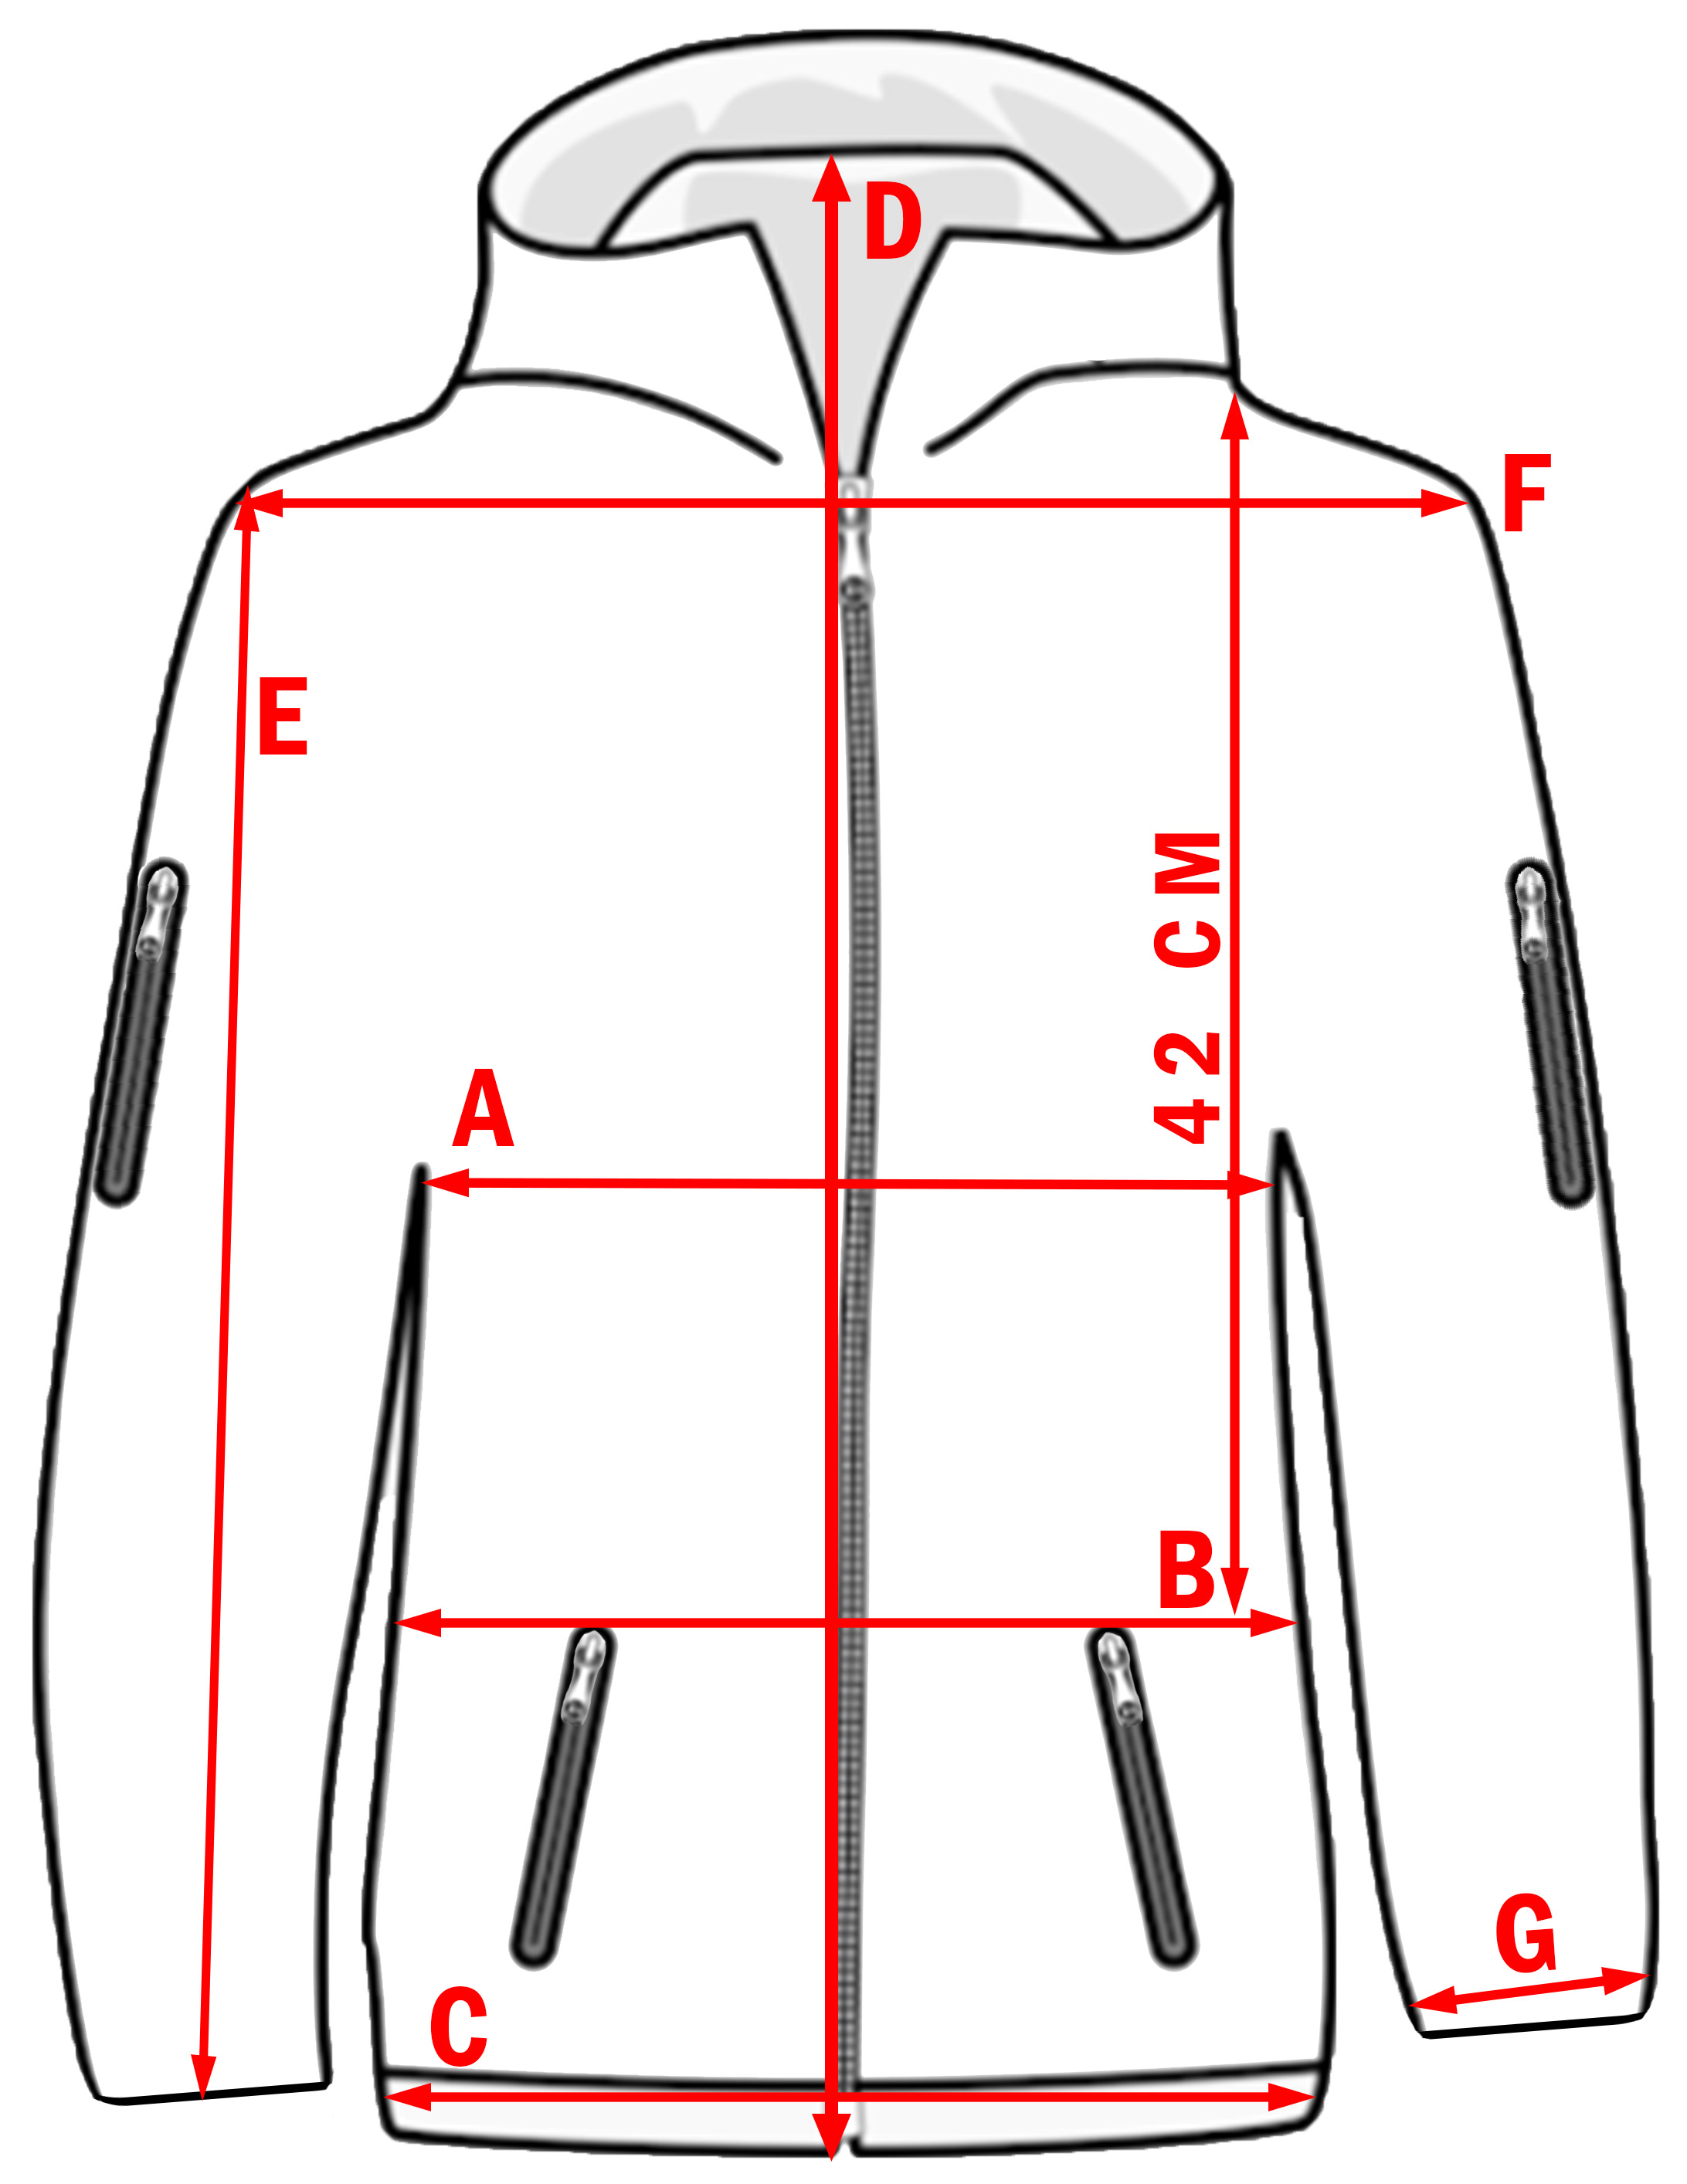 balins-88-sweatshirt-cizimi.jpg (498 KB)